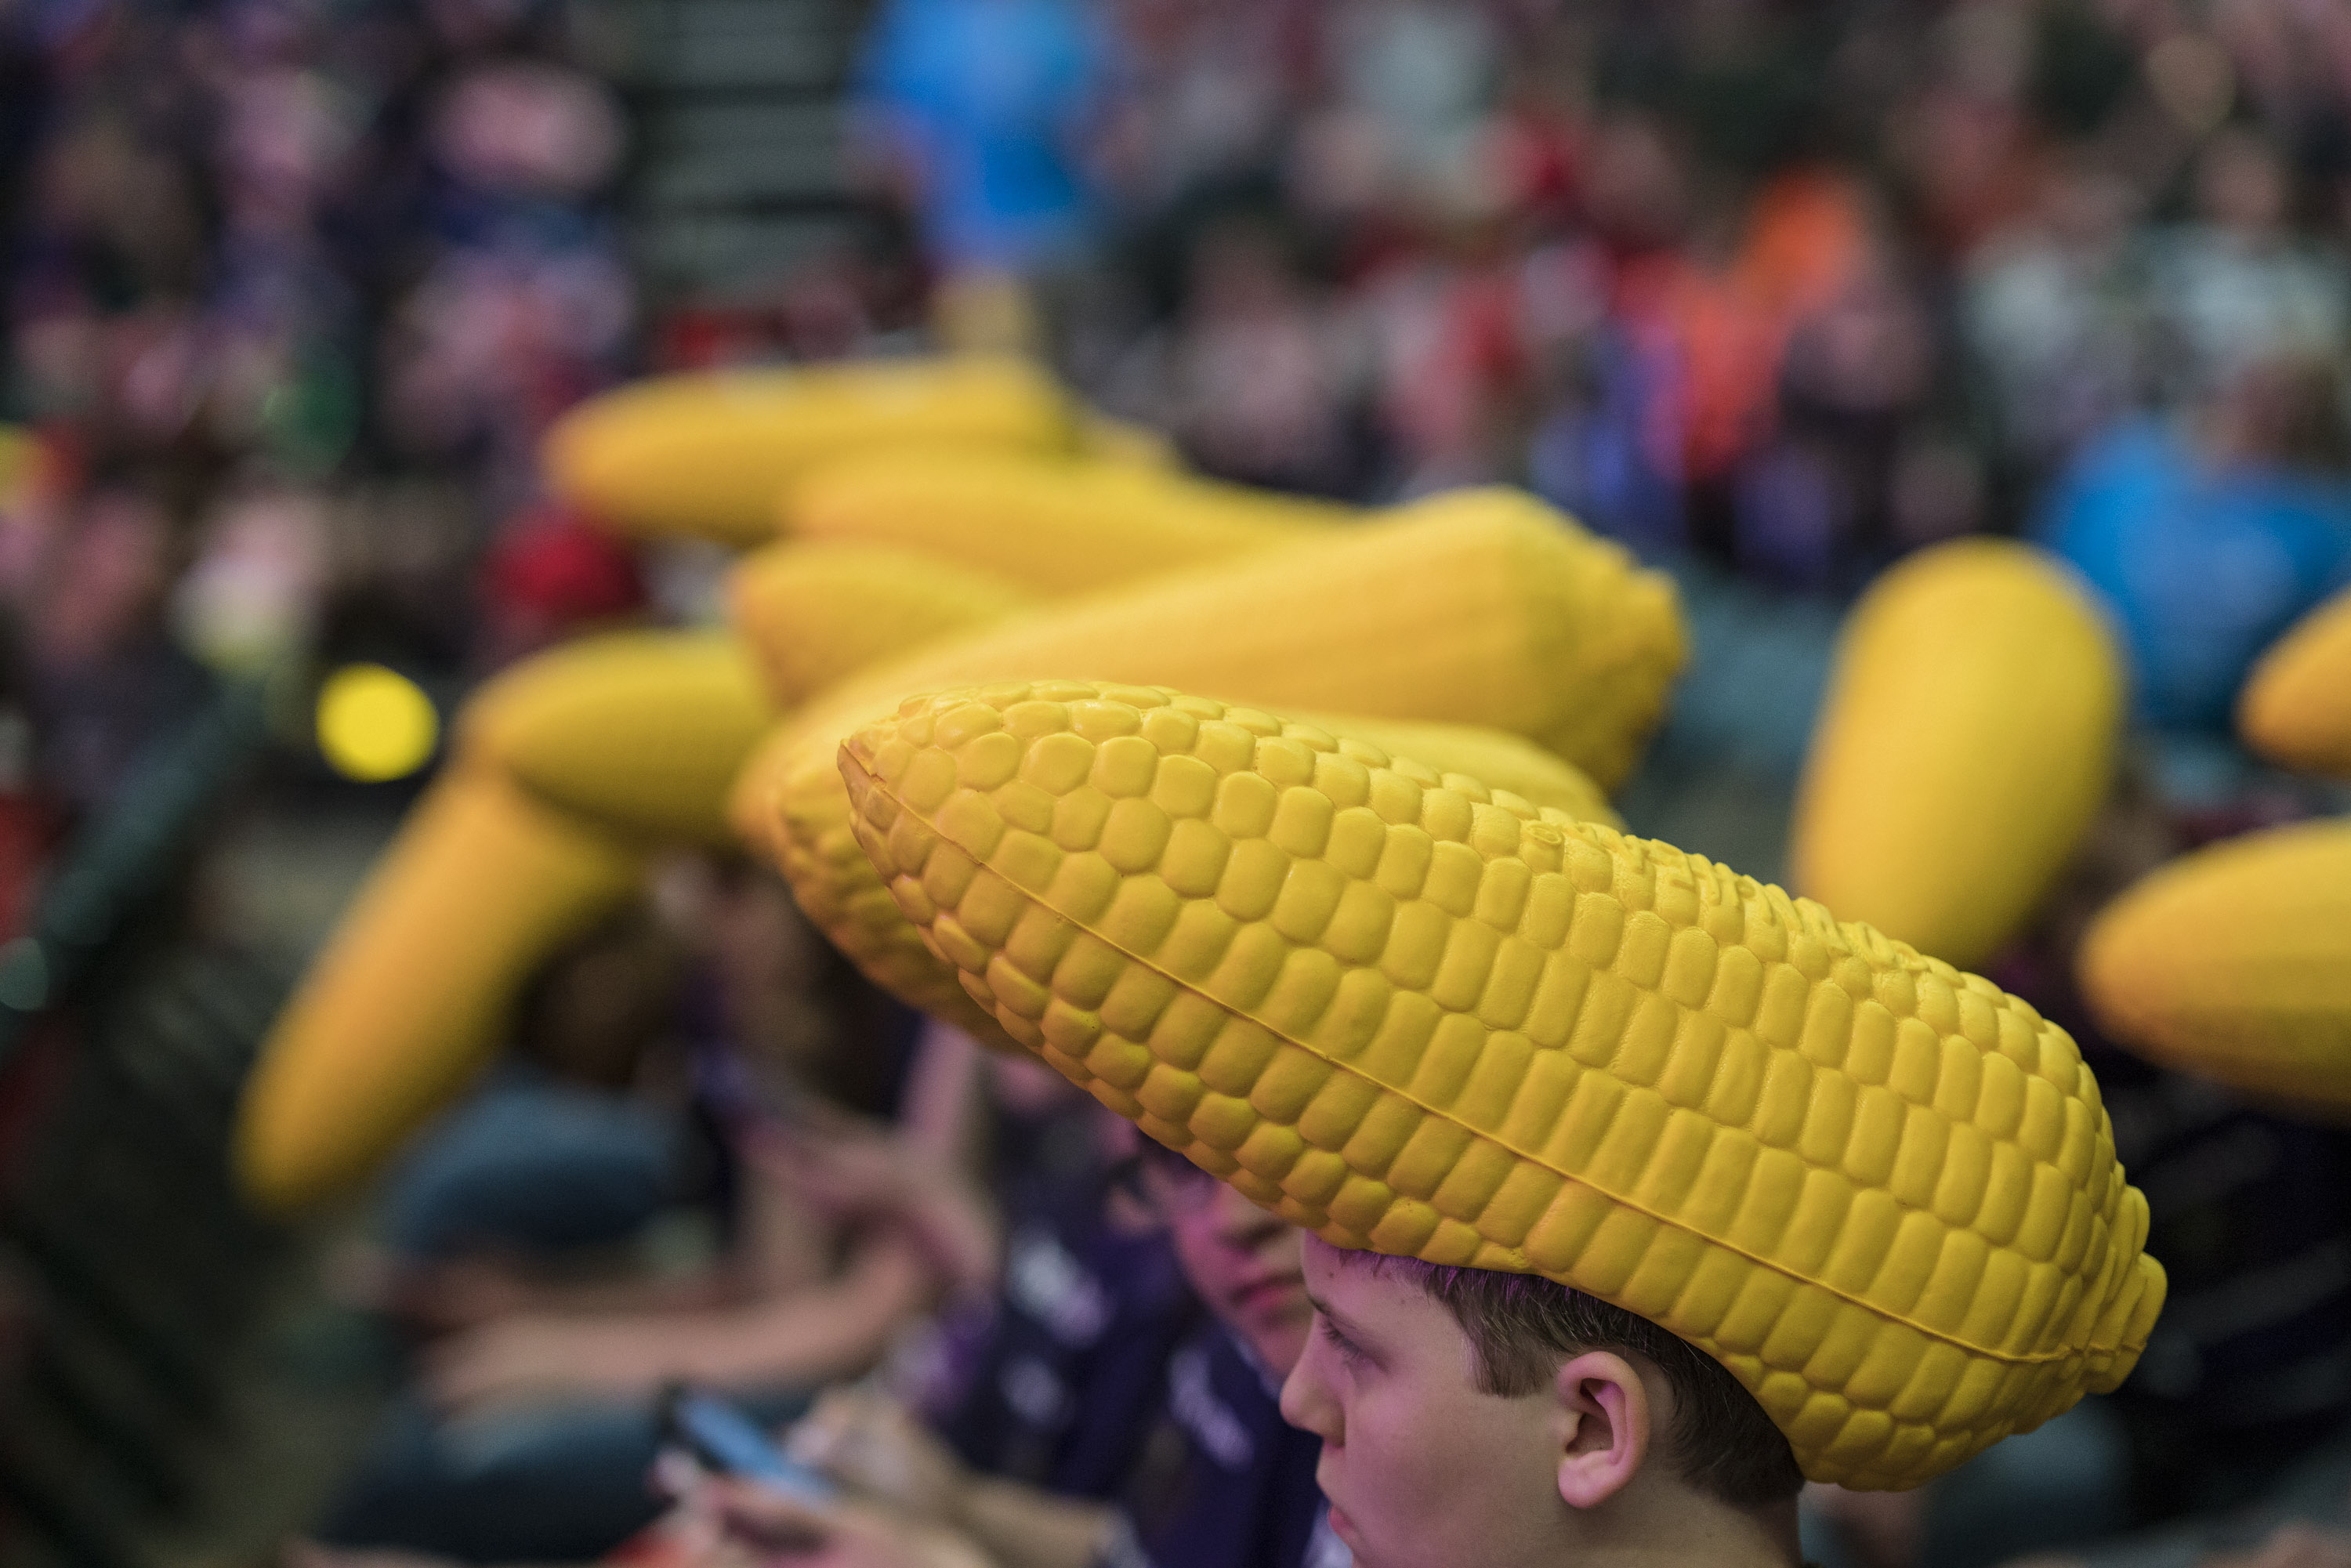 Students wearing corn hats